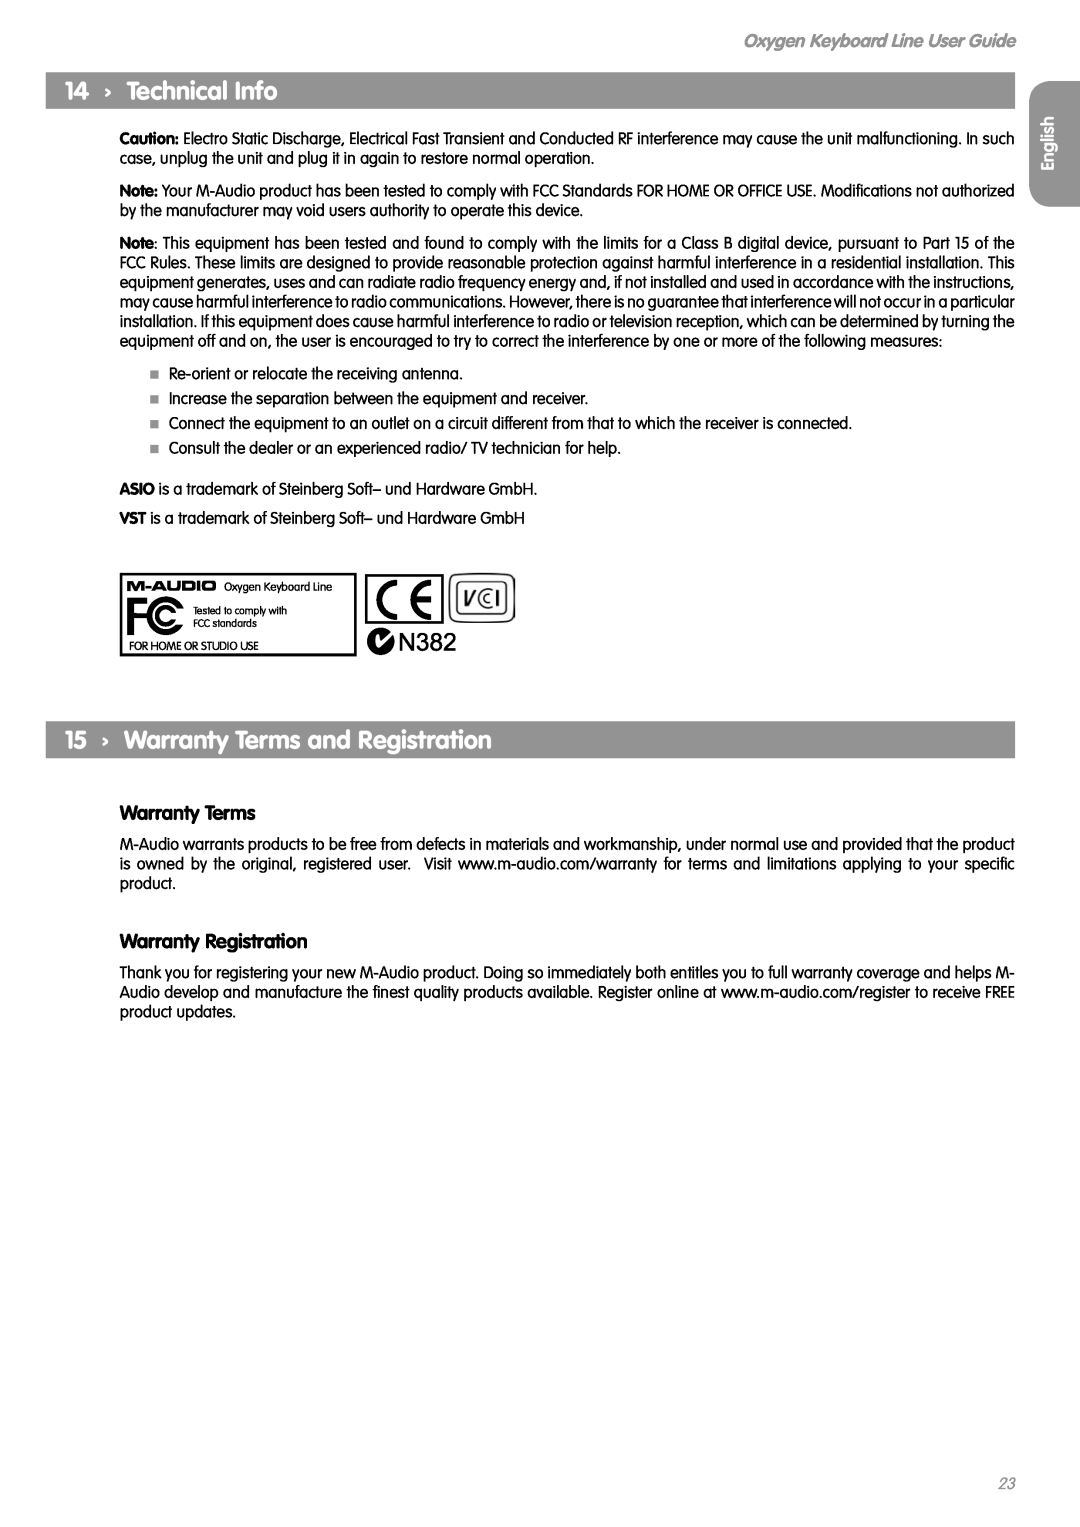 M-Audio OXYGEN 8 V2 manual 14 › Technical Info, 15 › Warranty Terms and Registration, Warranty Registration, English 